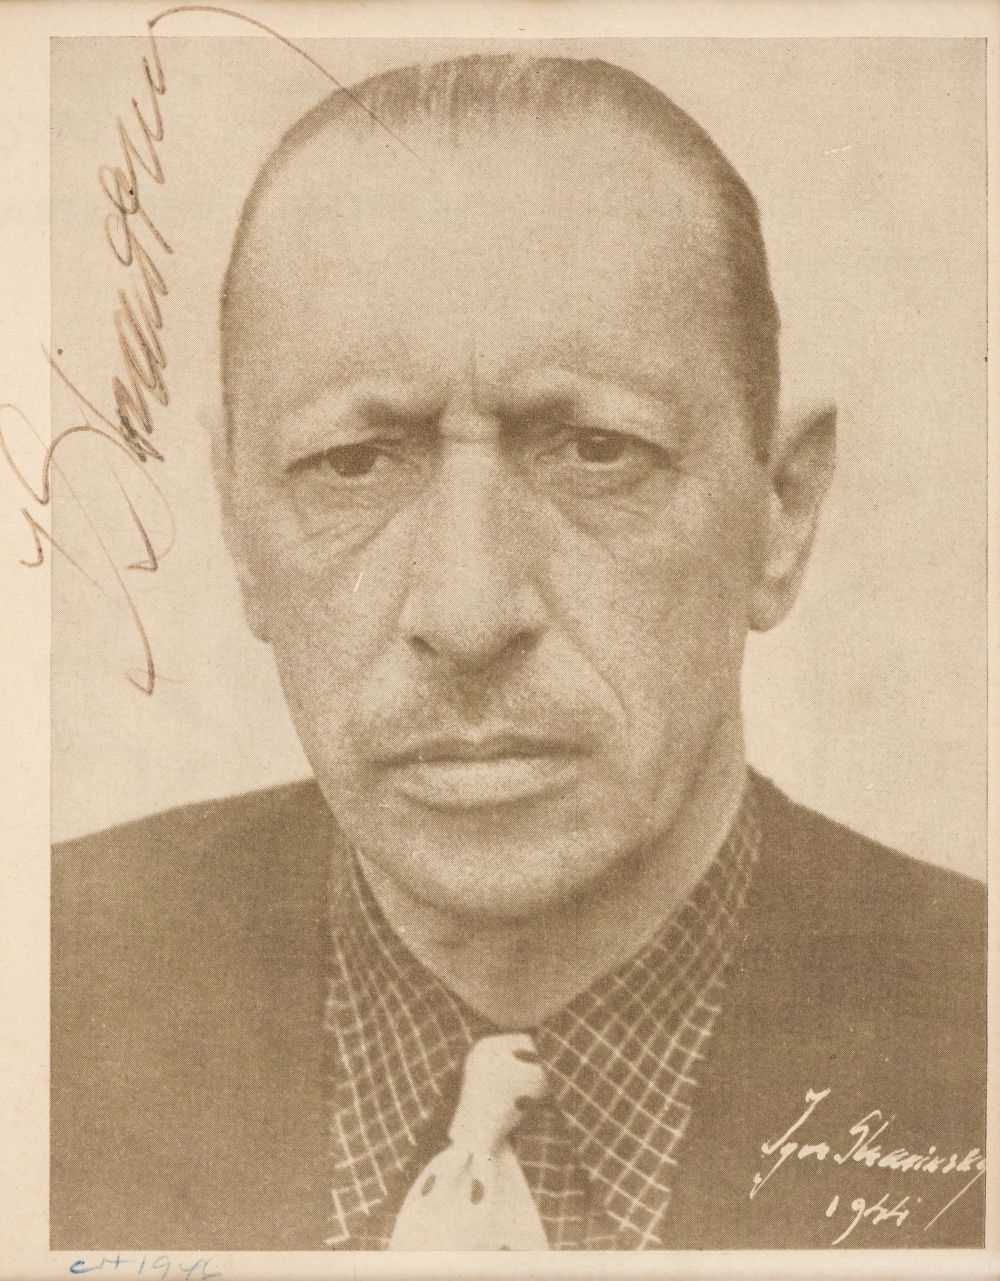 Lot 152 - Stravinsky (Igor, 1882-1971). Signed portrait, c. 1946